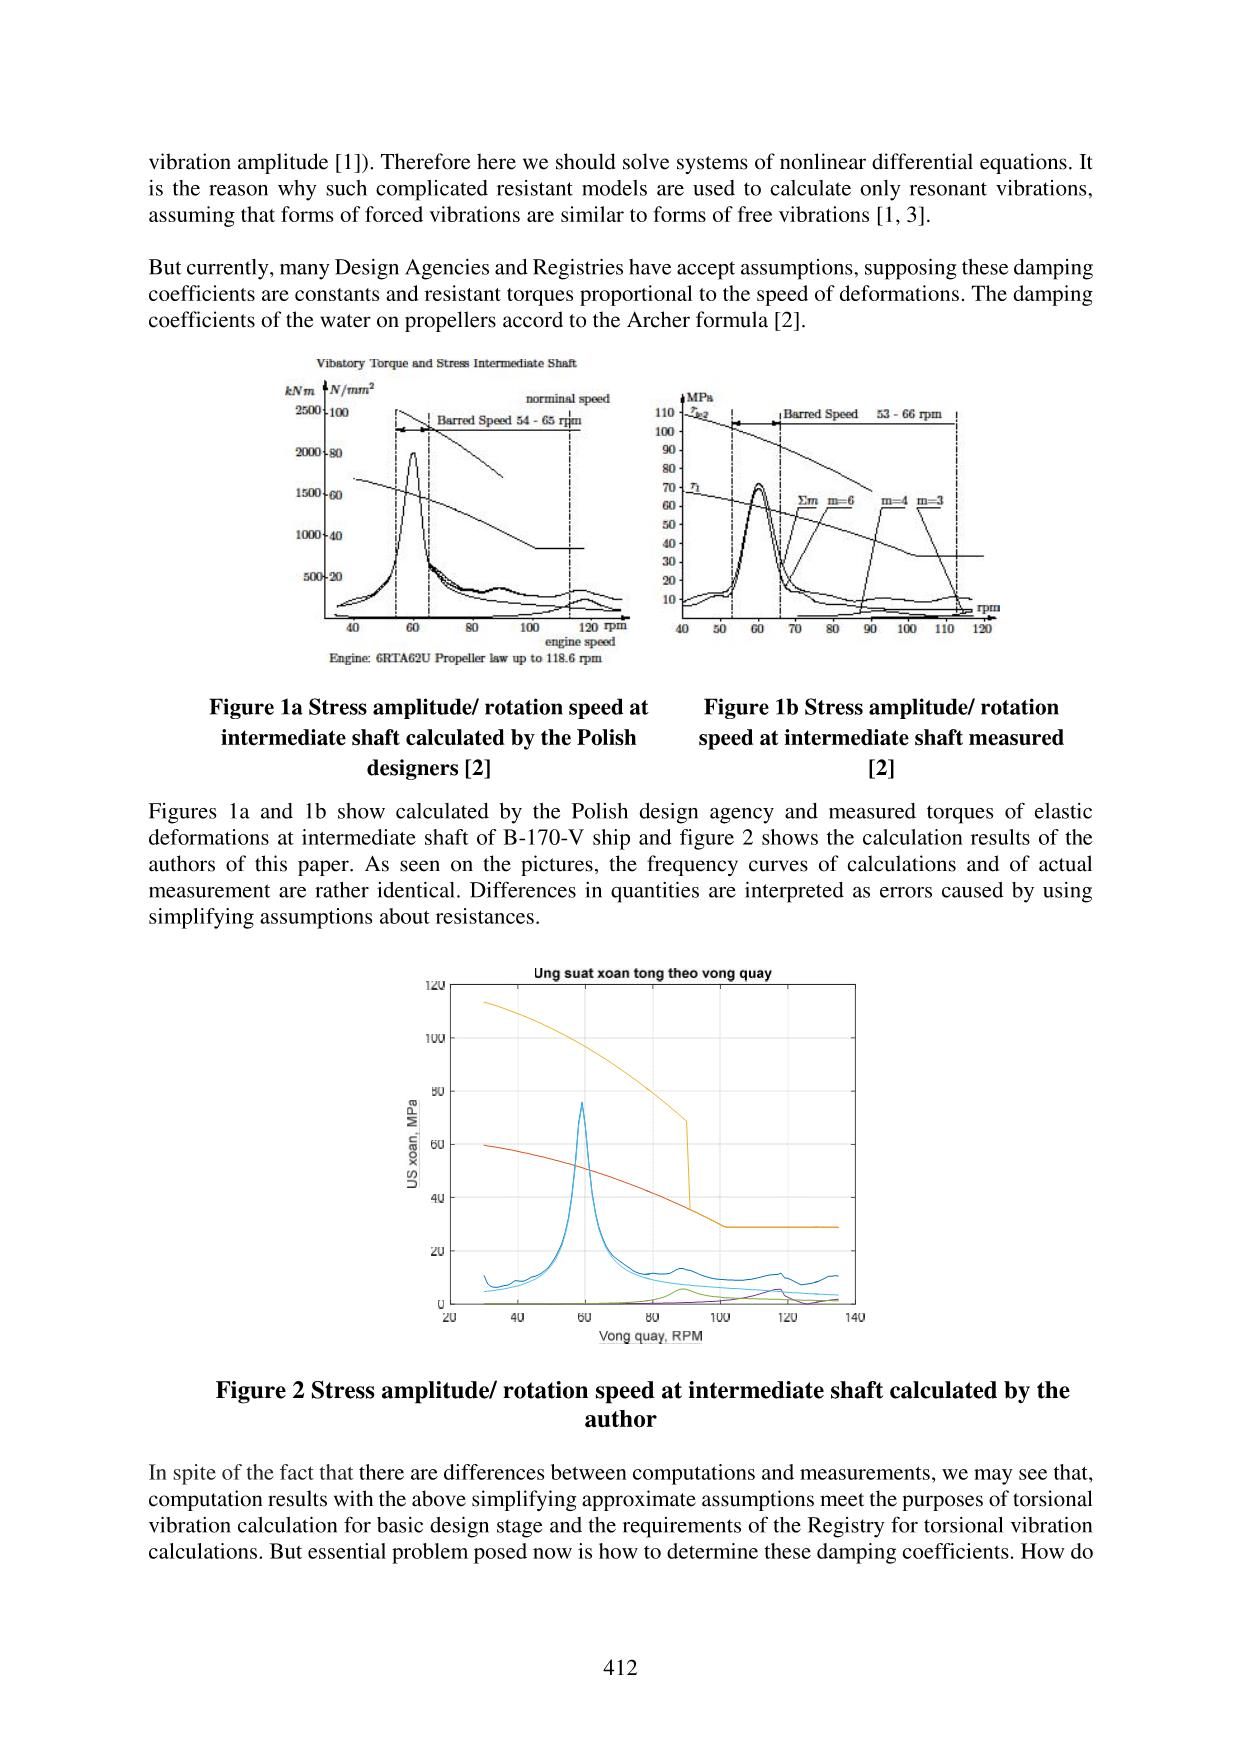 The determining torsional vibration damping coefficients algorithm for computing marine shafting’s vibrations trang 2